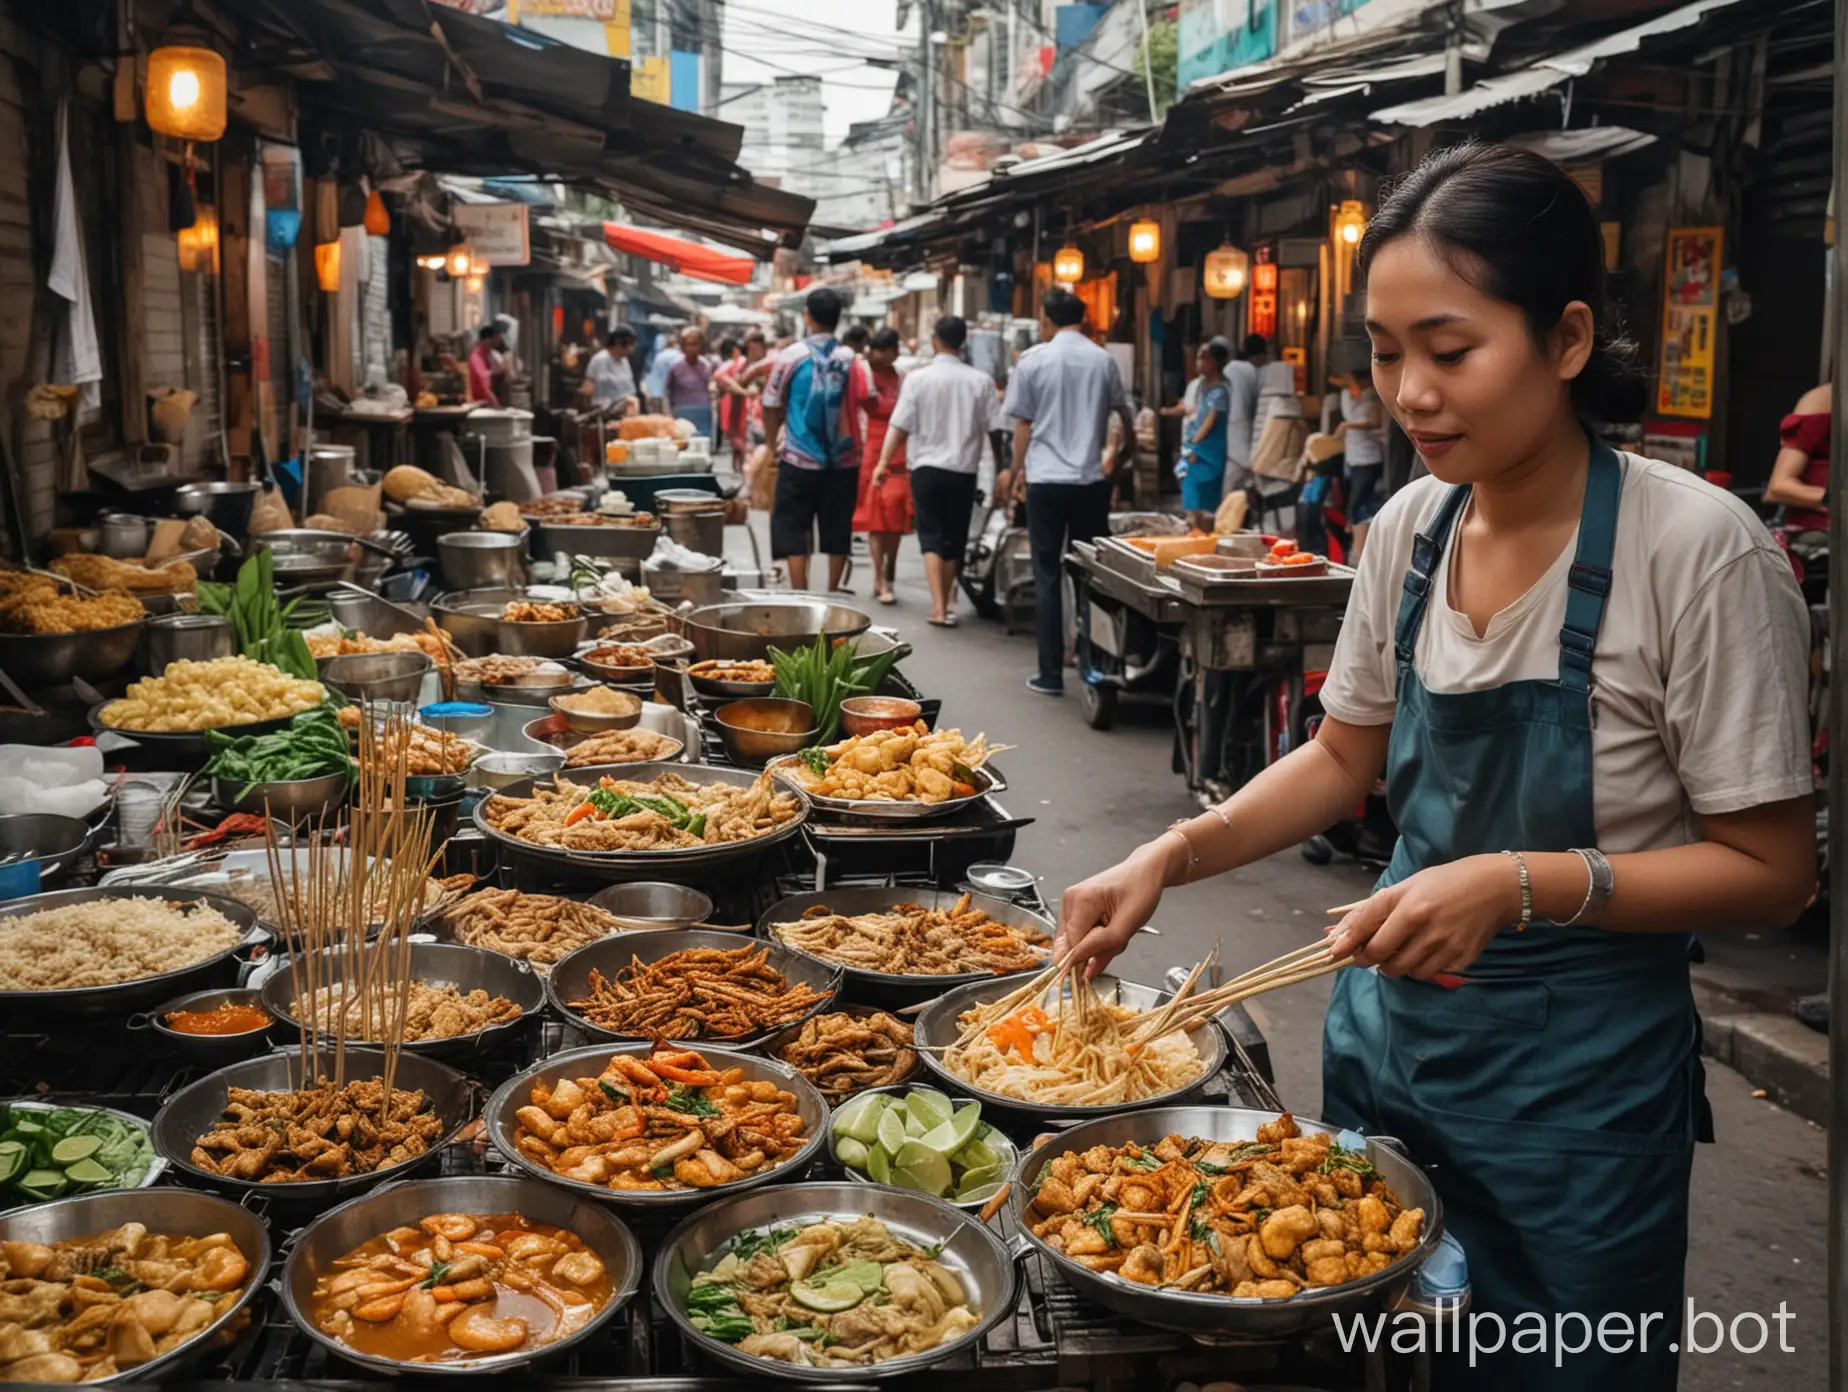 Thai street food vendor in the backstreets of Bangkok